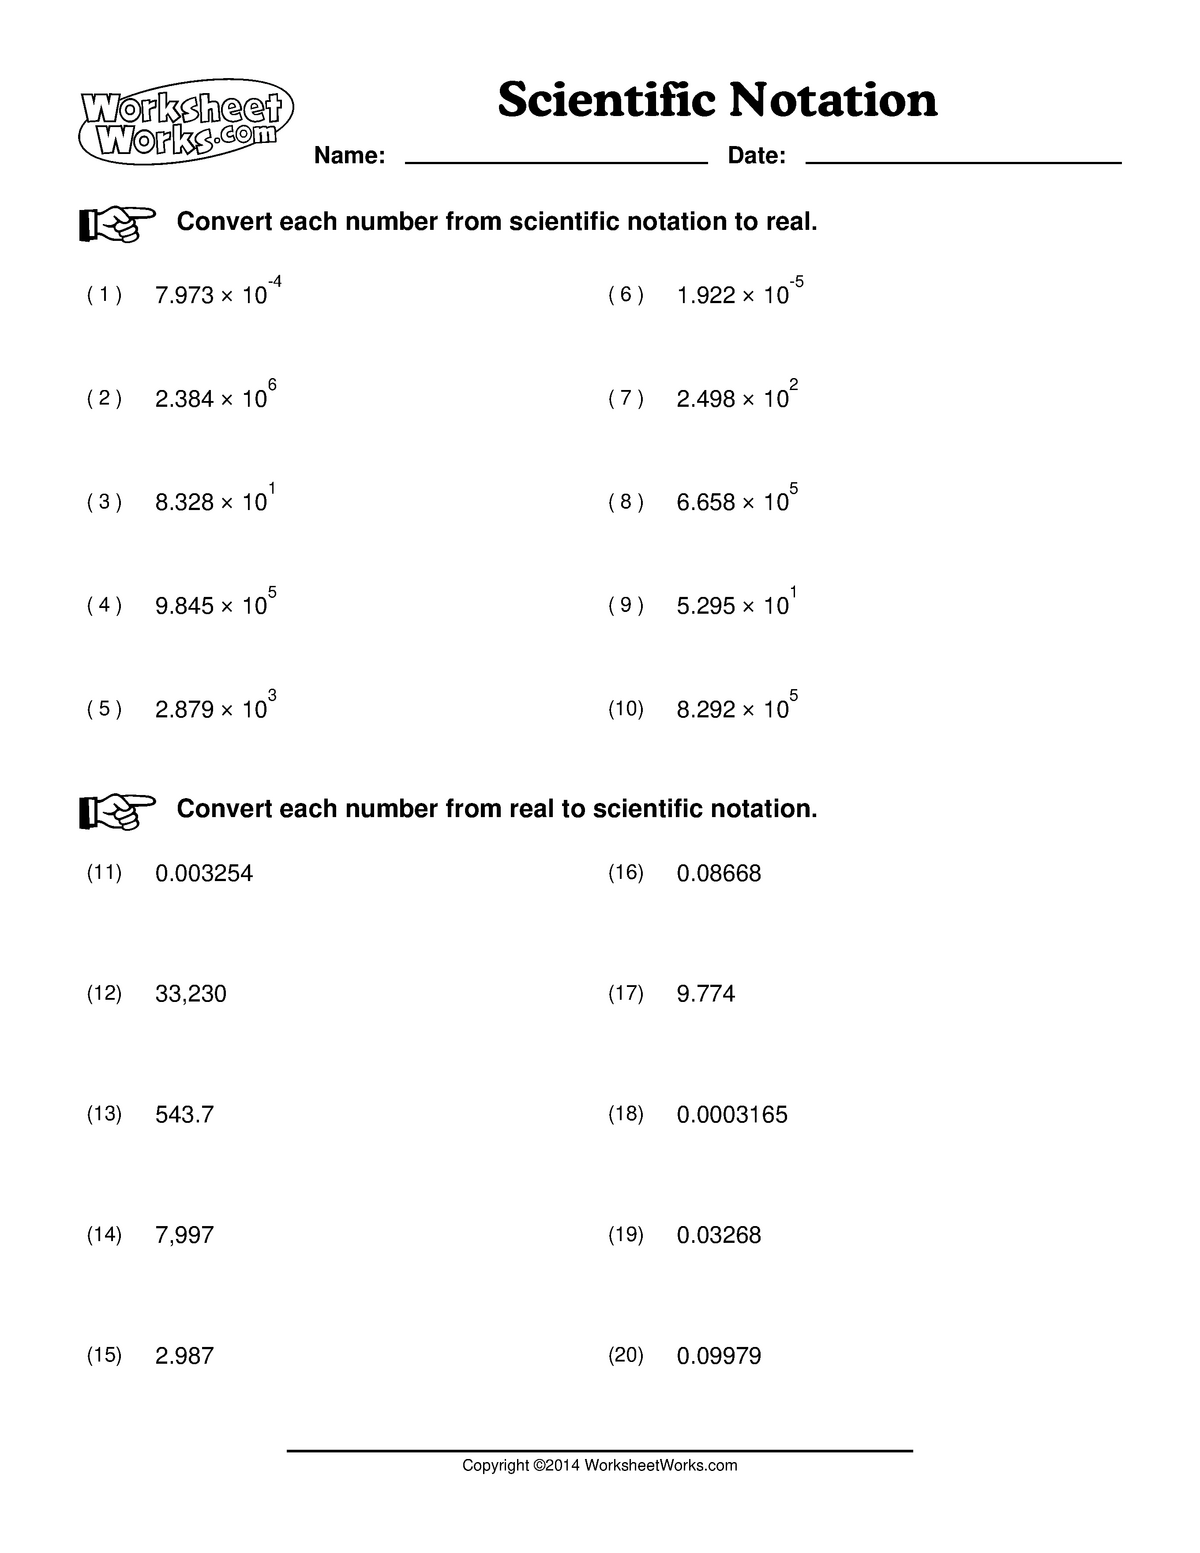 Scientific Notation Practice Problems - StuDocu Within Scientific Notation Practice Worksheet